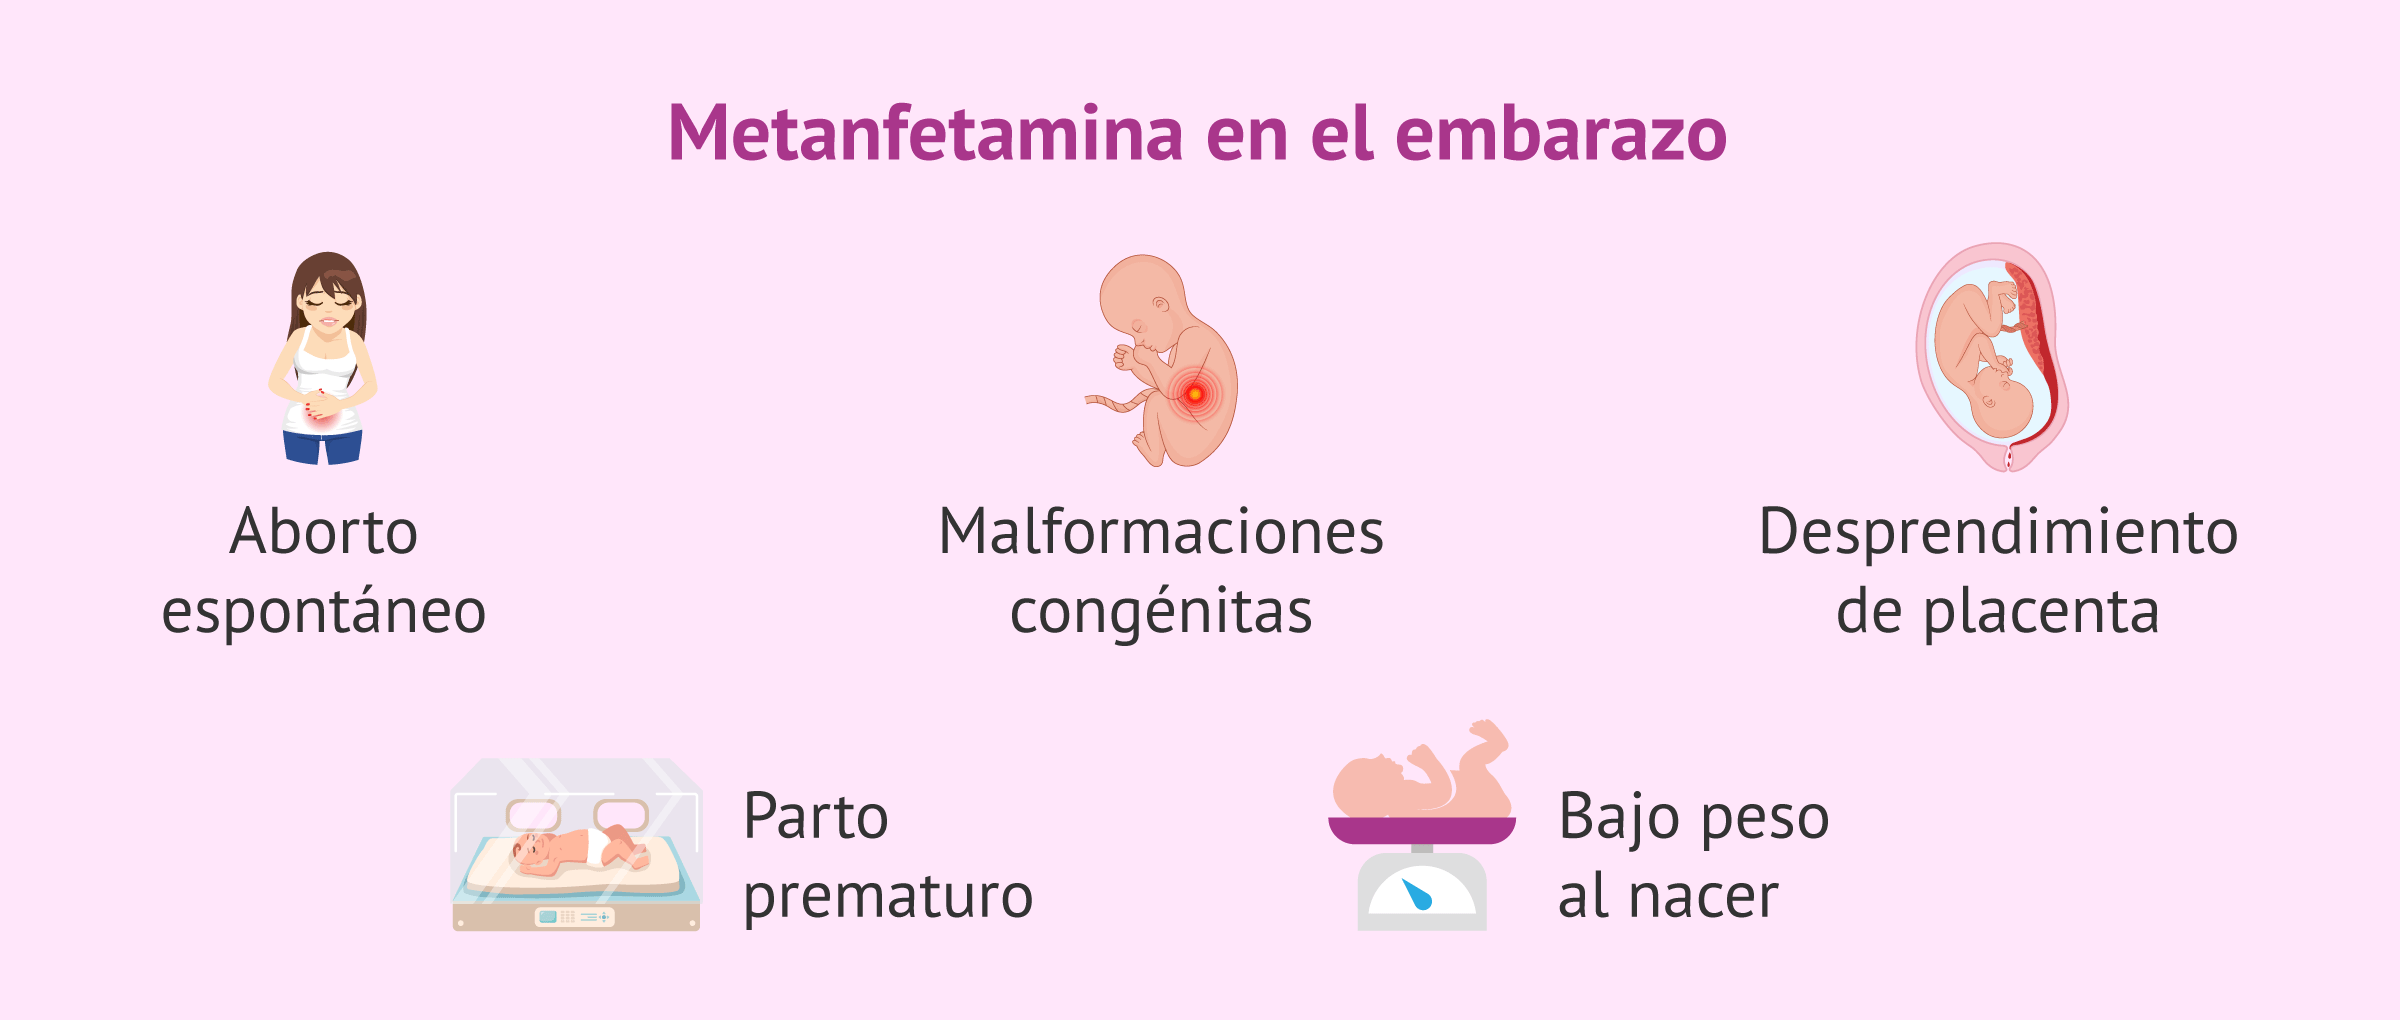 Consumir metanfetamina estando embarazada